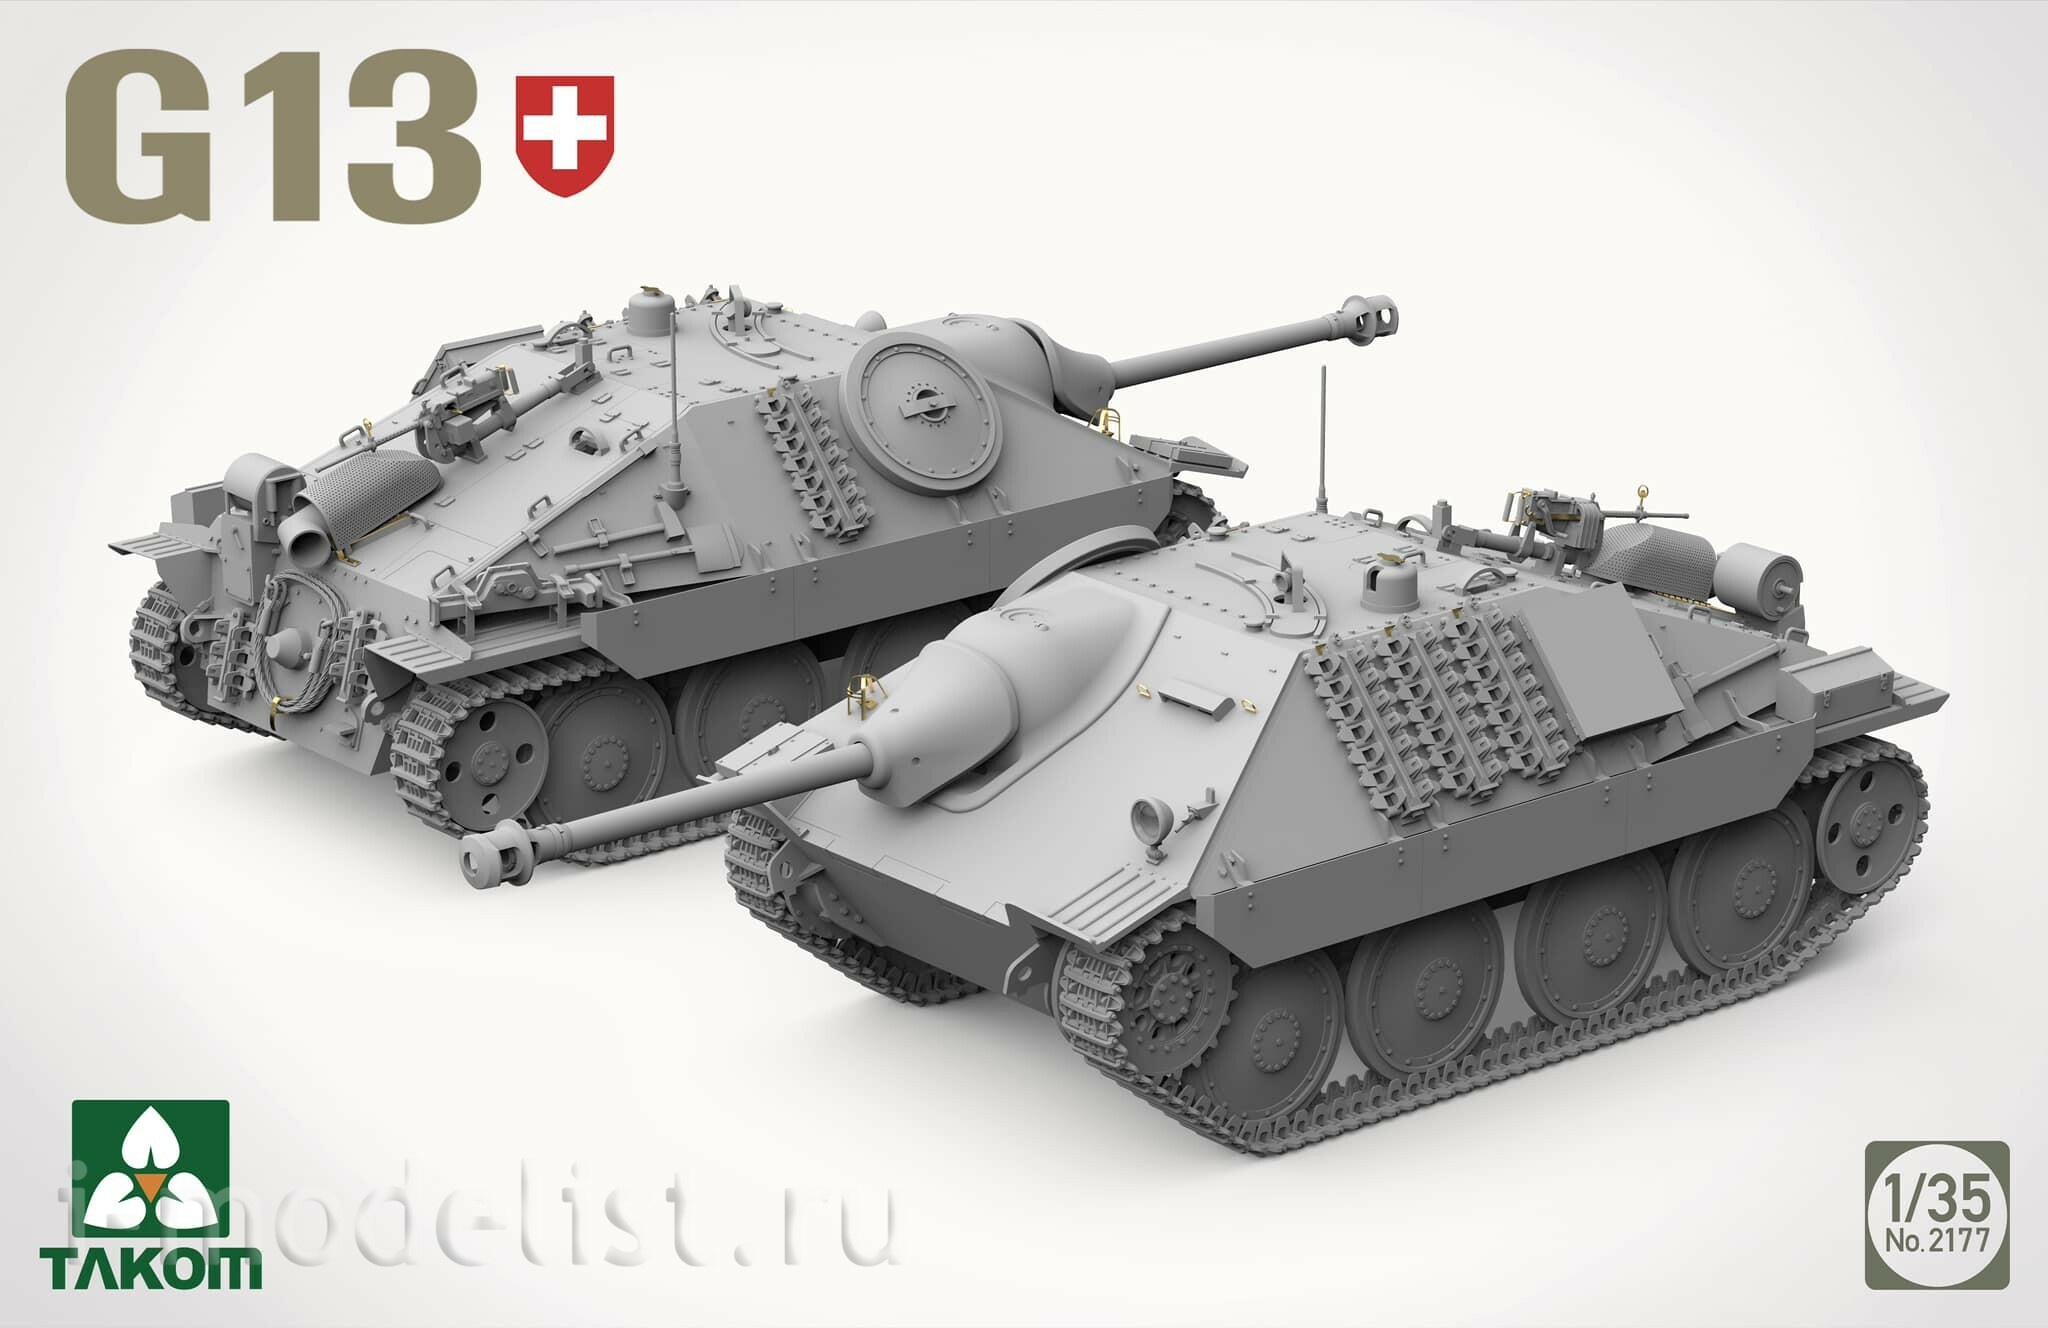 2177 Takom 1/35 Tank Destroyer Swiss Stalker G13 Jagdpanzer 38(t)